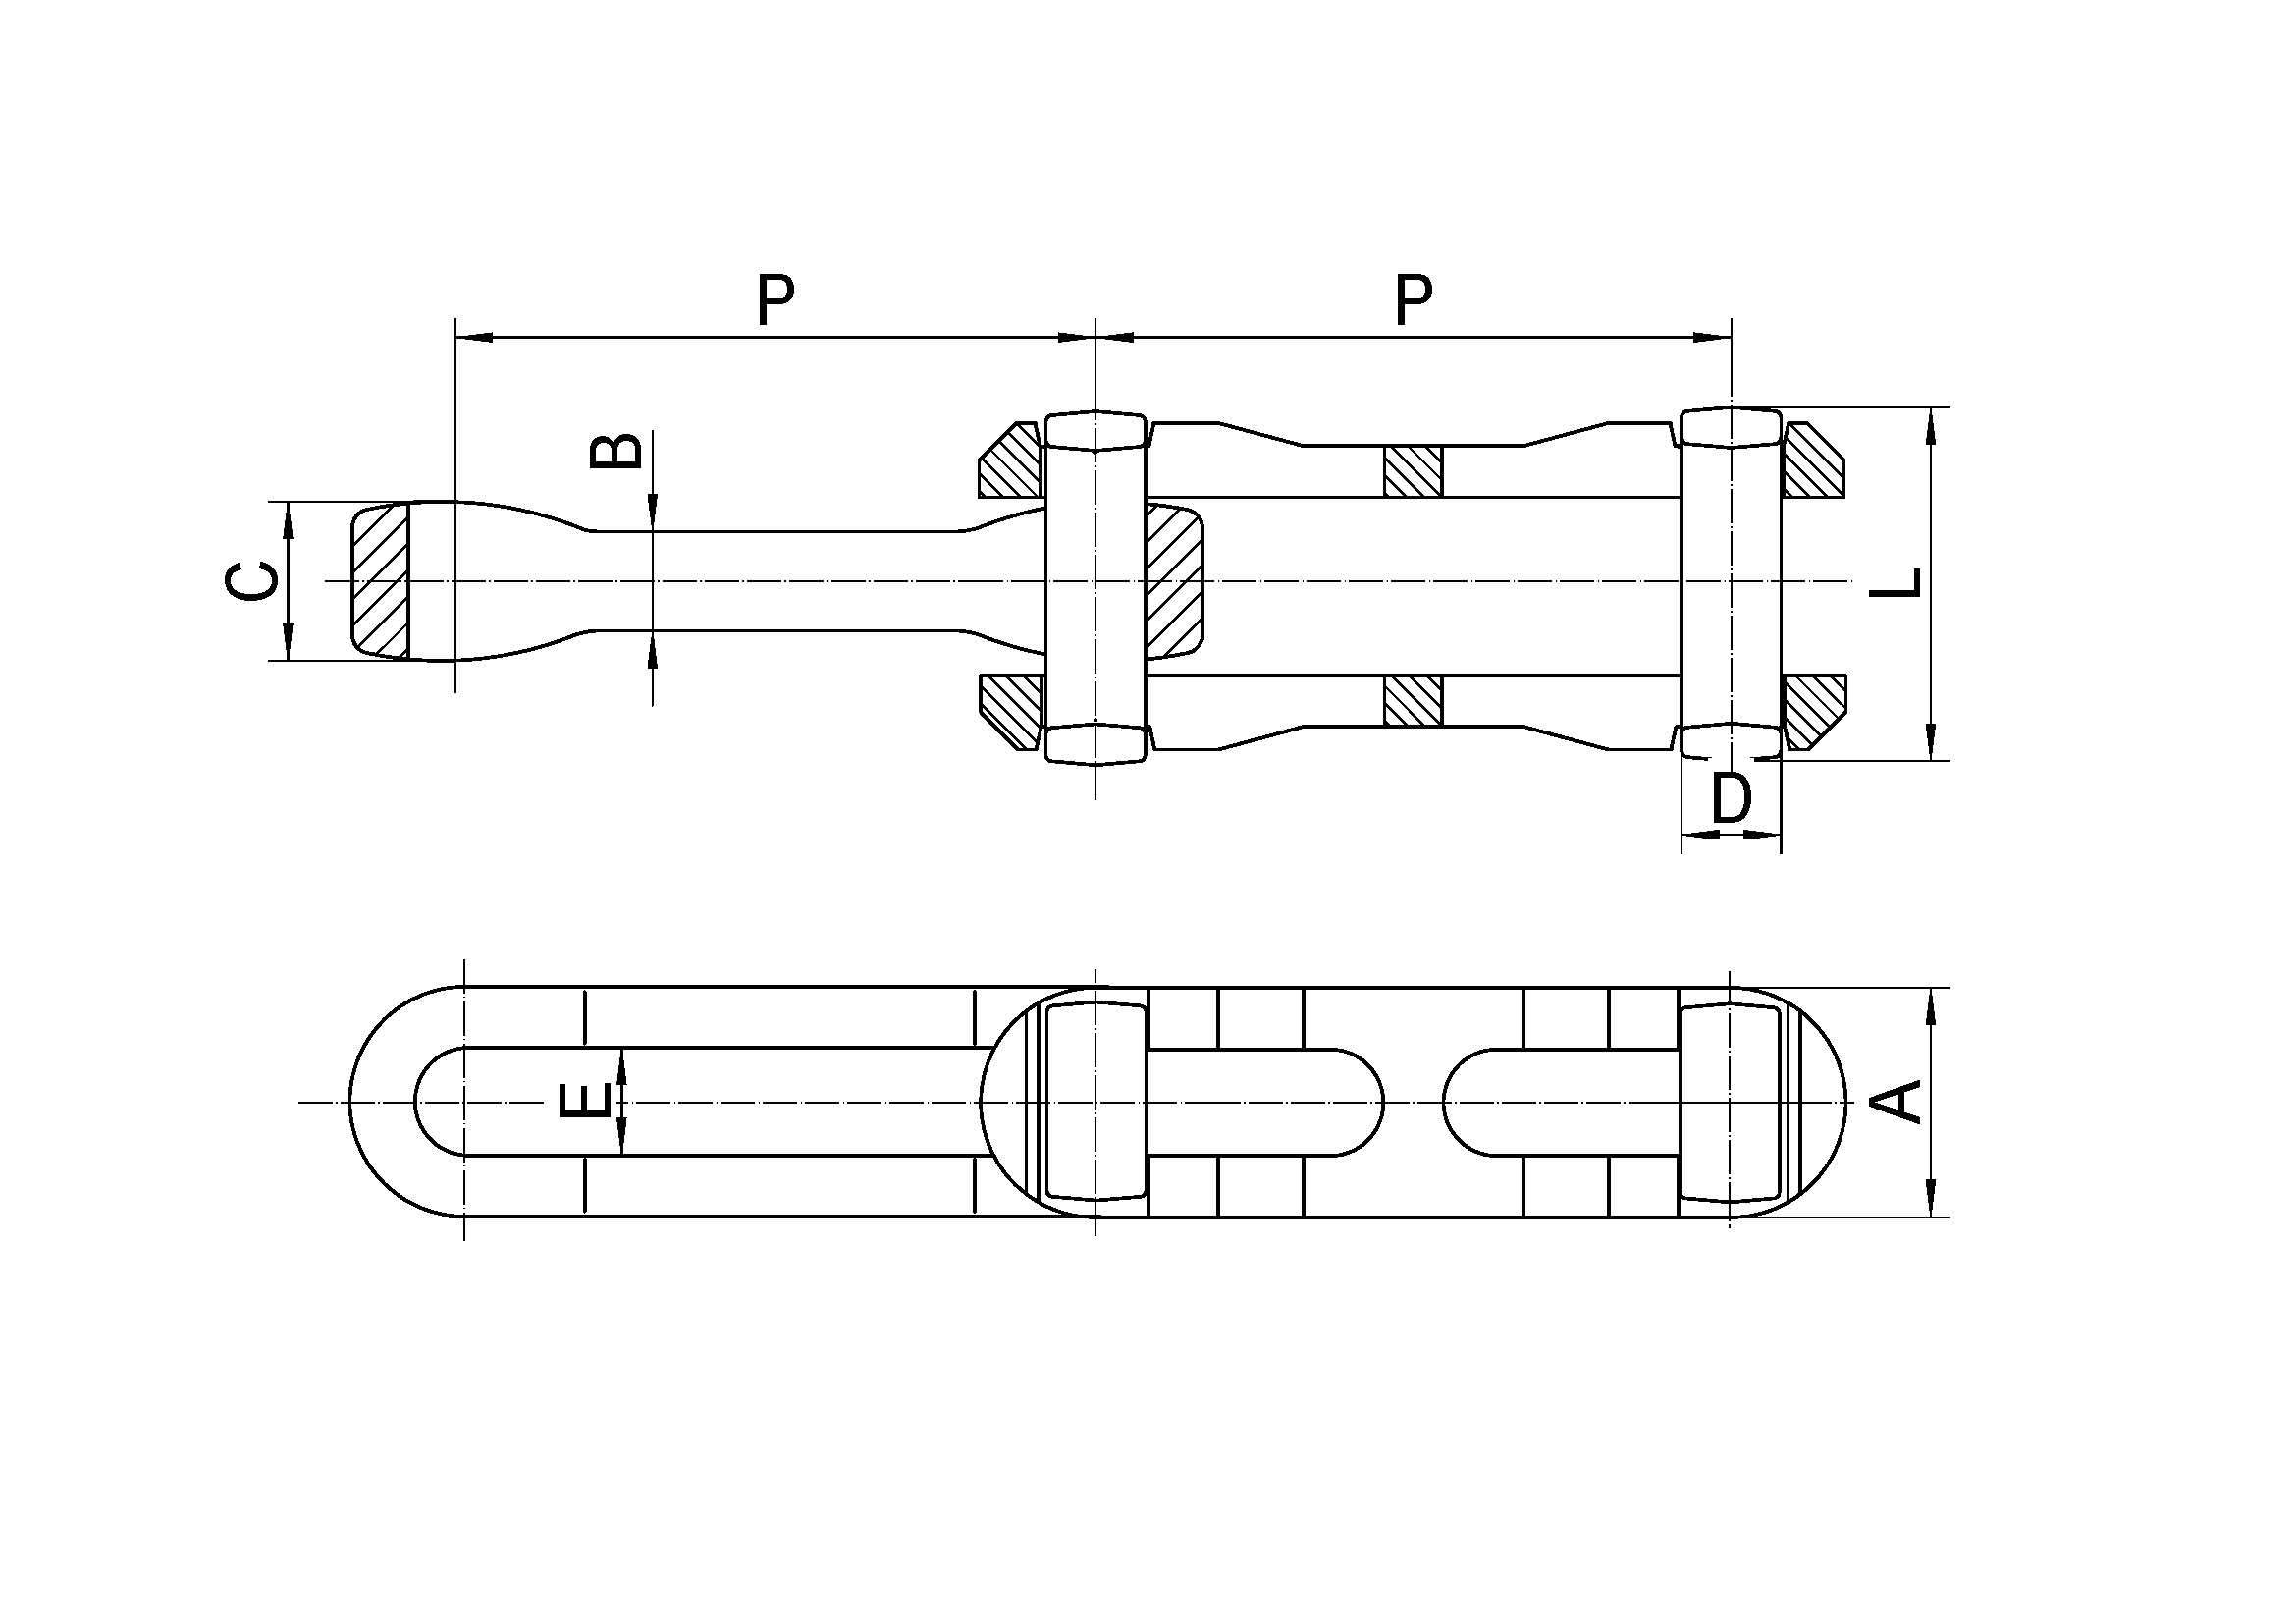 4" conveyor chain